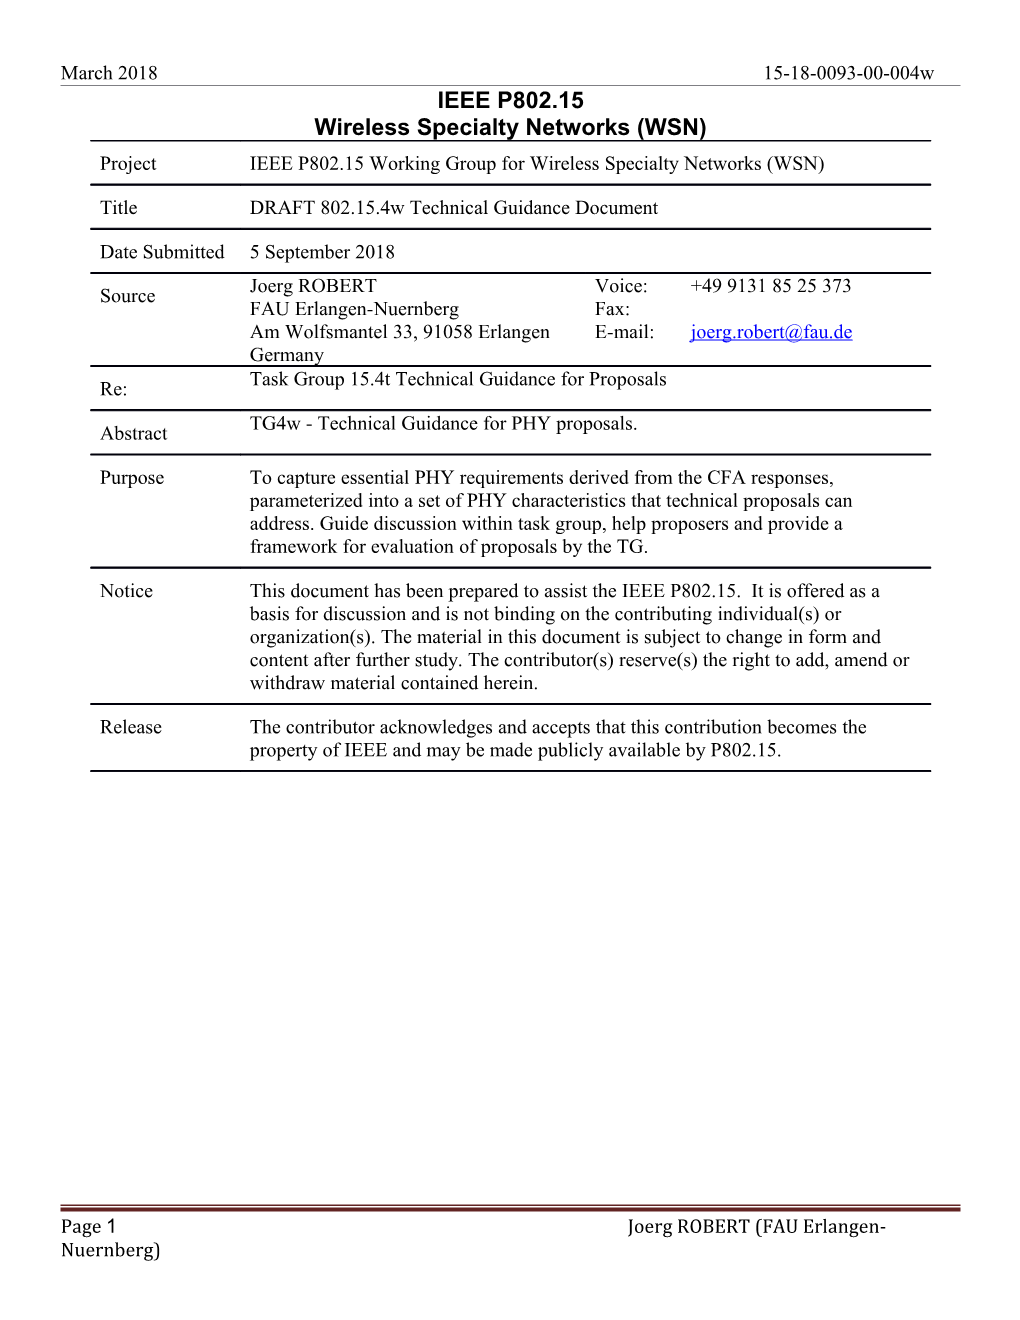 DRAFT 802.15.4W Technical Guidance Document